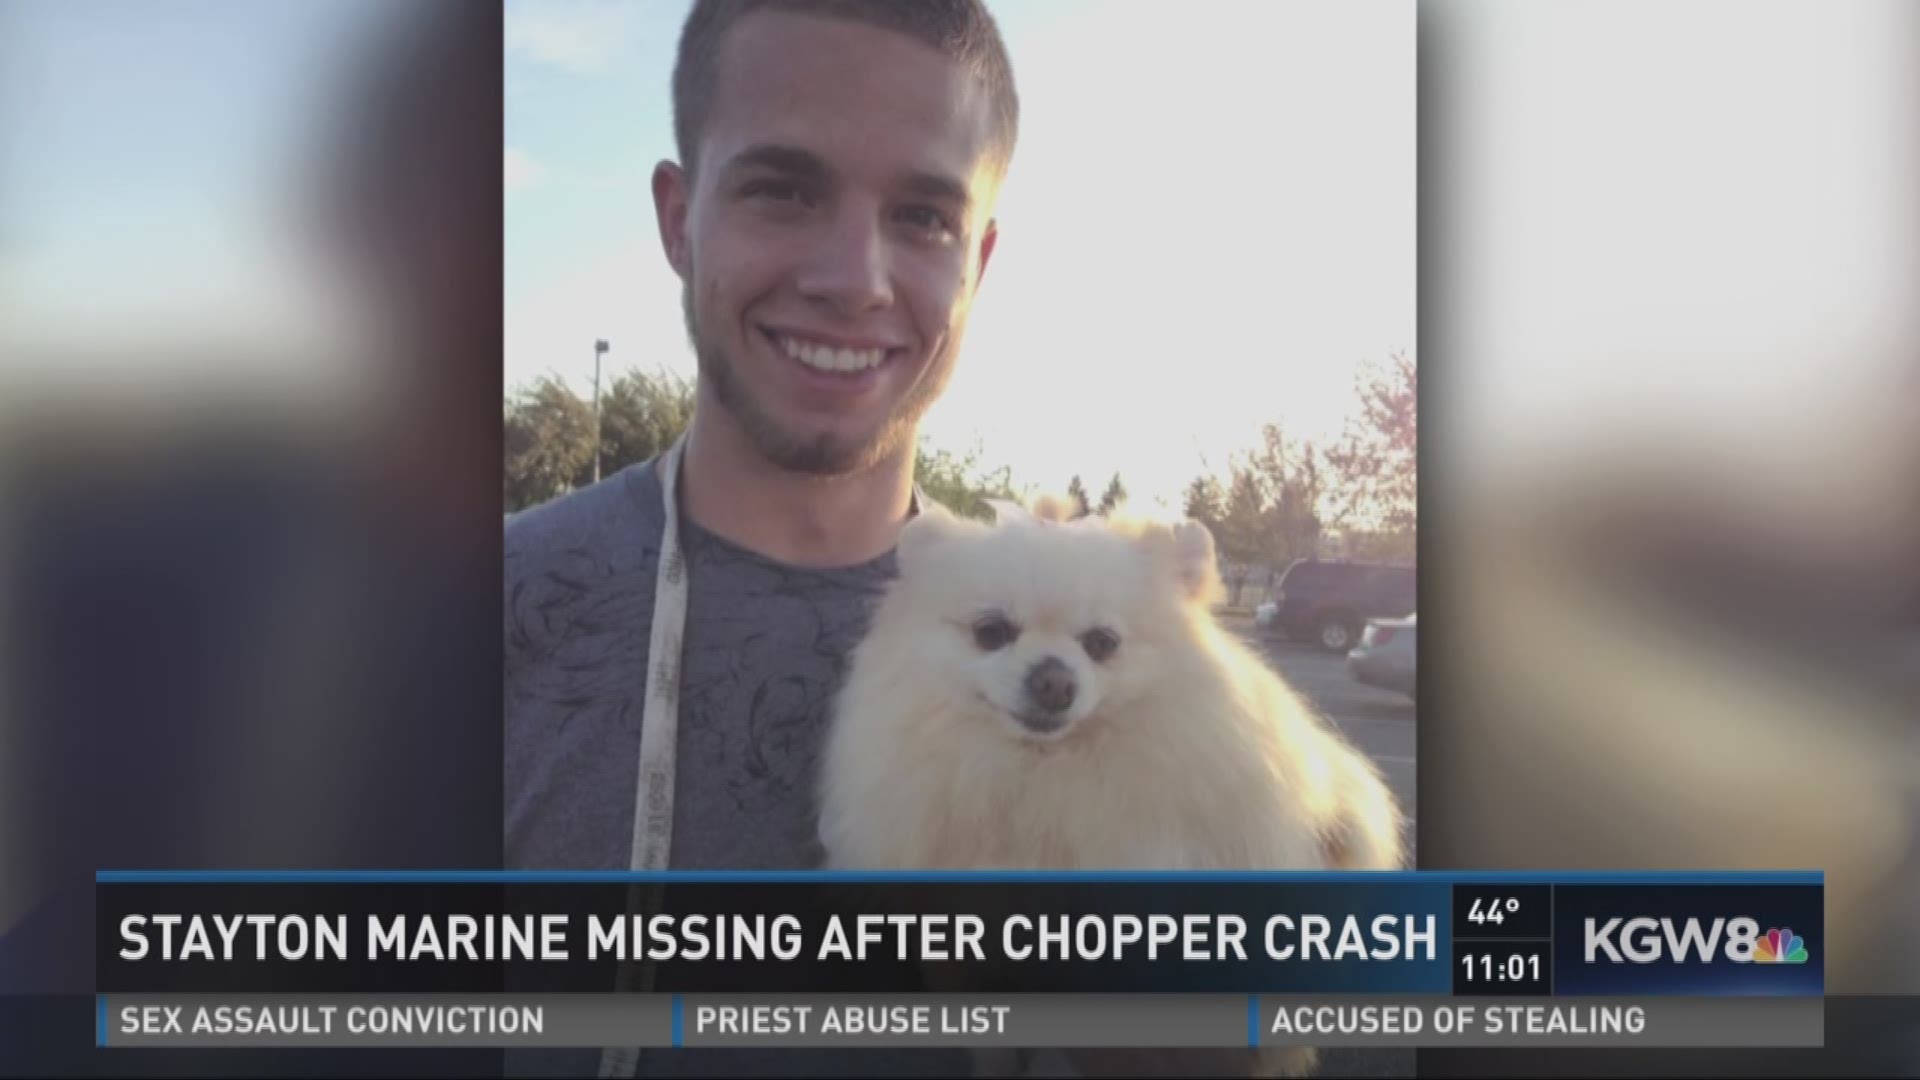 Stayton marine missing after chopper crash